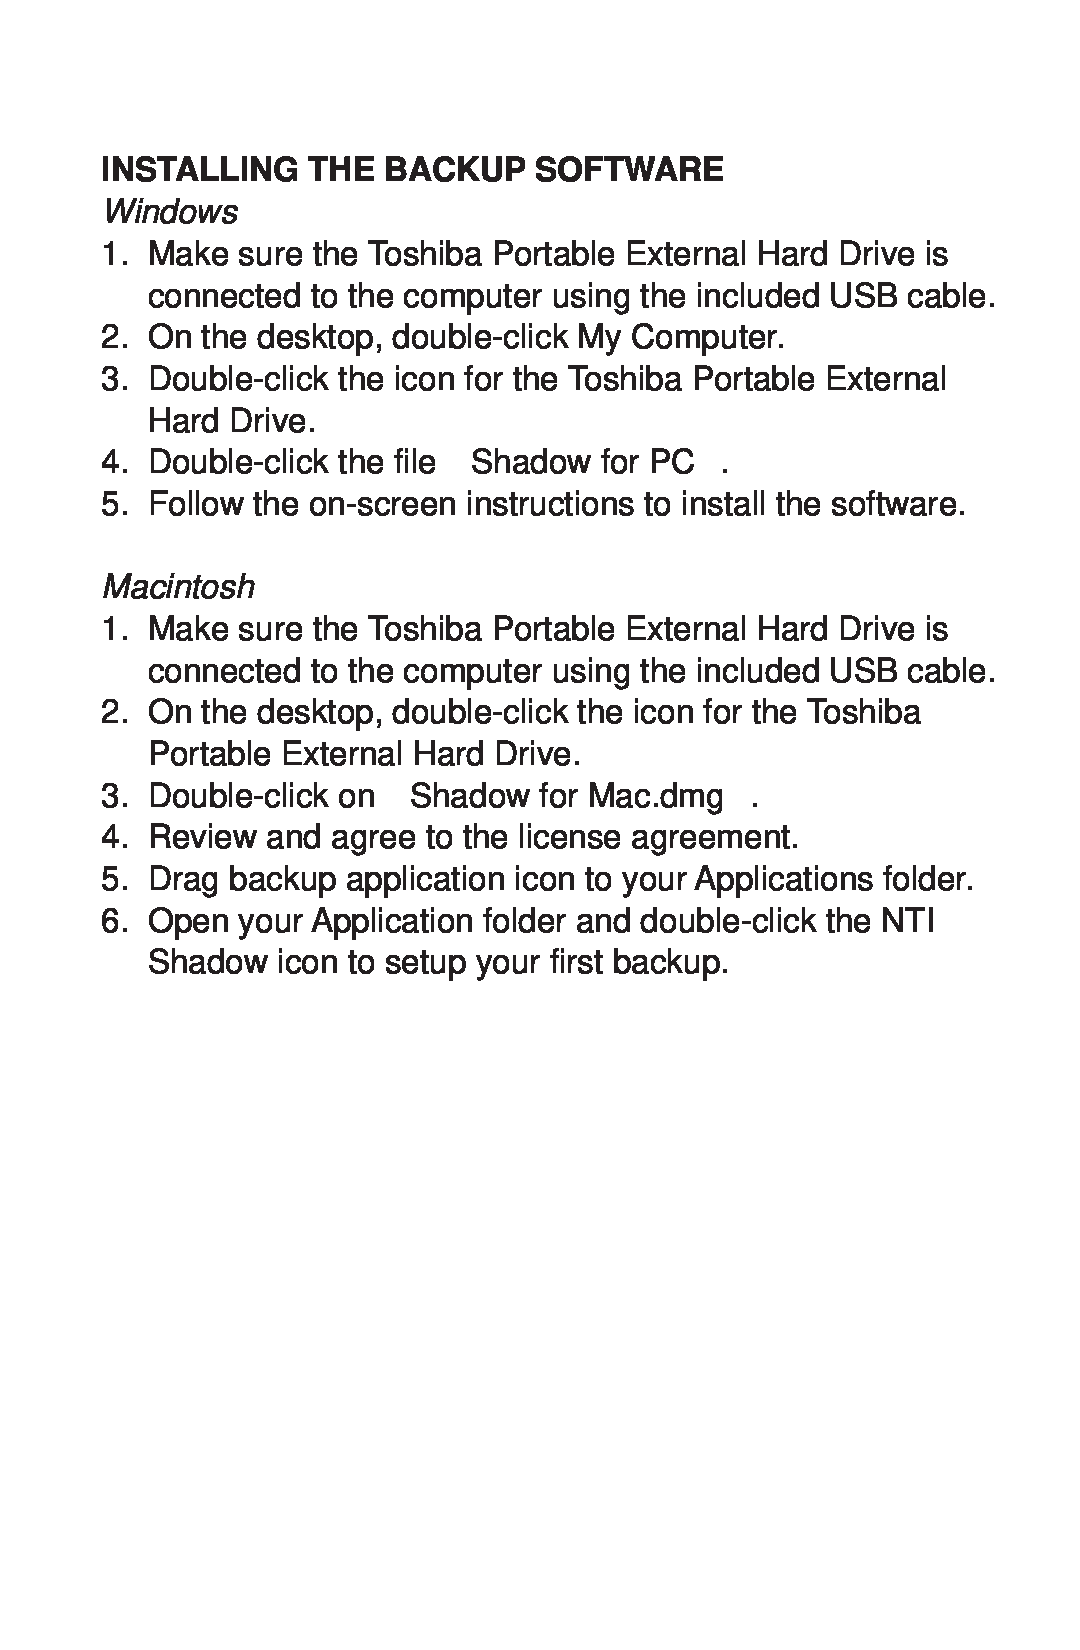 Toshiba 480082-D0 warranty Installing The Backup Software, Windows, Macintosh 